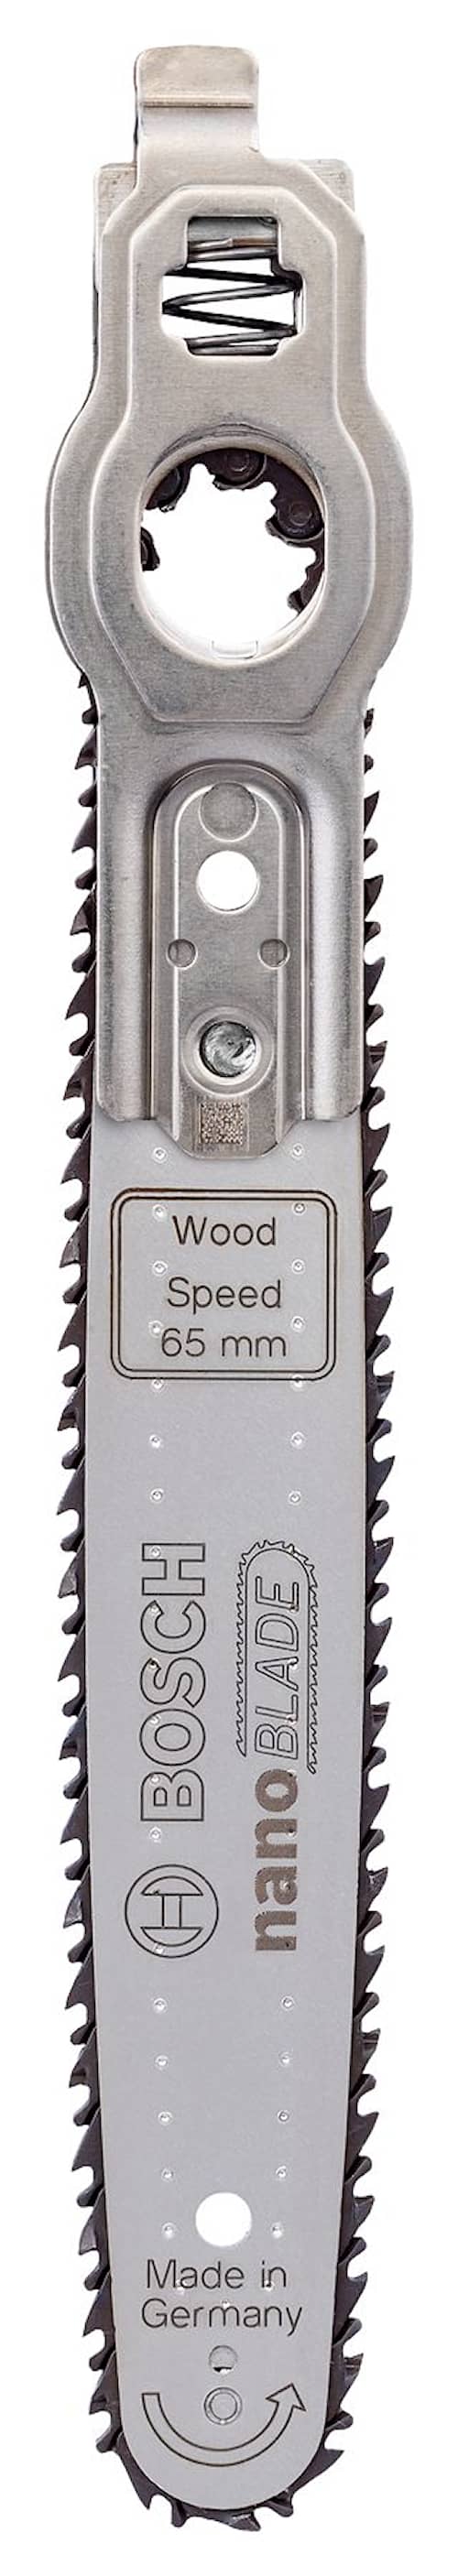 Bosch nanoBlade Wood Speed 65 savklinge 65 mm